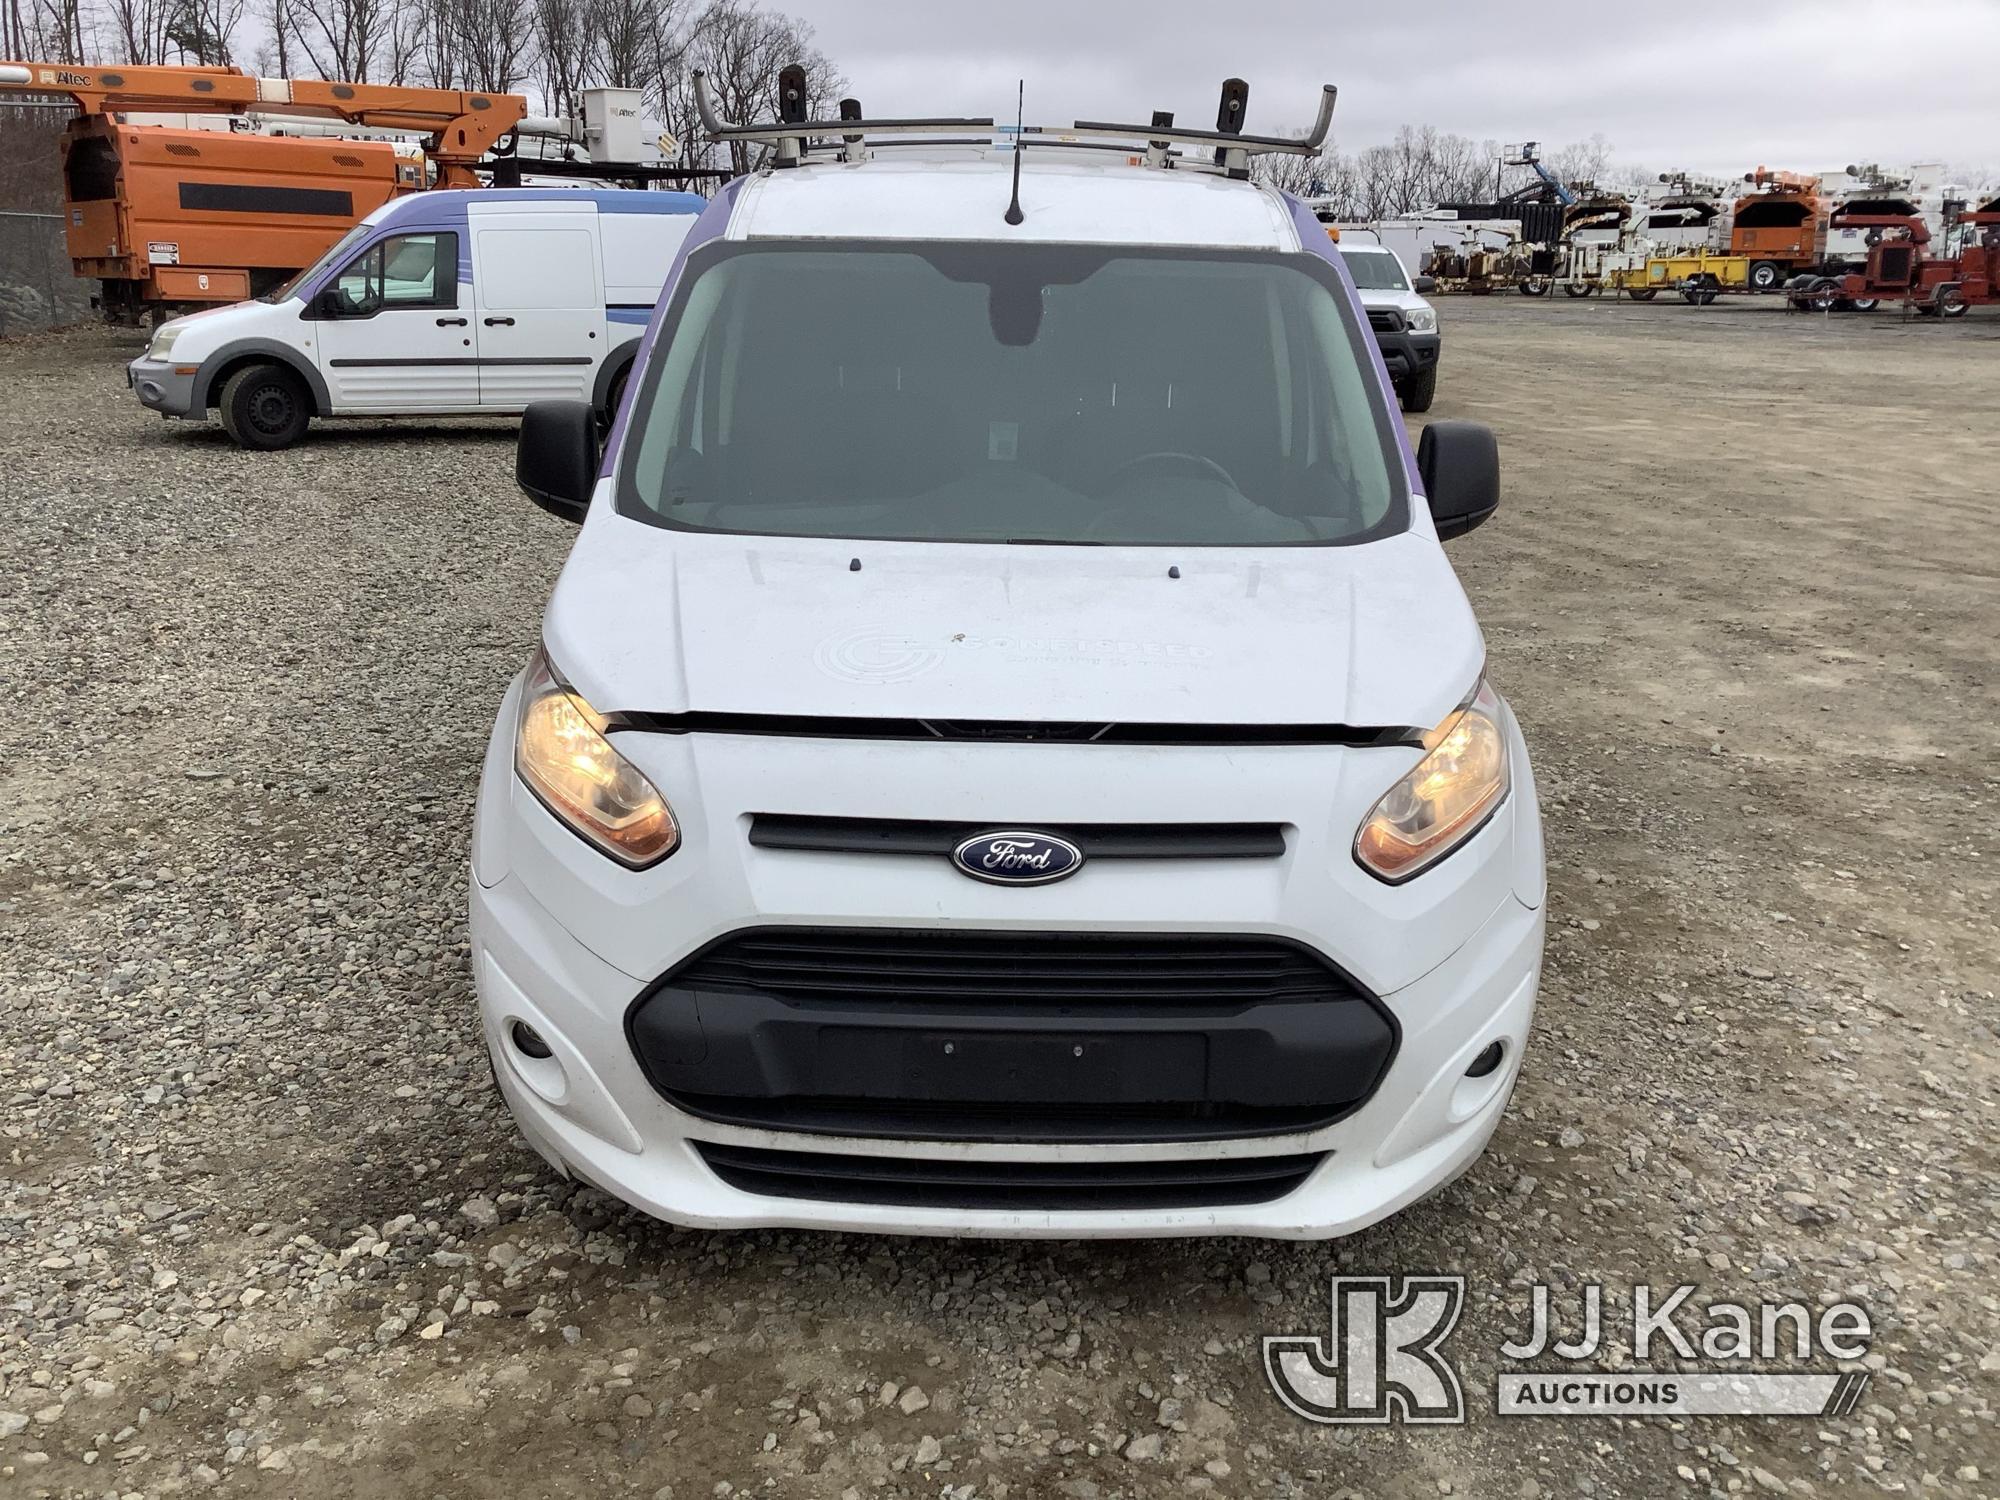 (Shrewsbury, MA) 2016 Ford Transit Connect Mini Cargo Van Runs & Moves) (Check Engine Light On, Rust